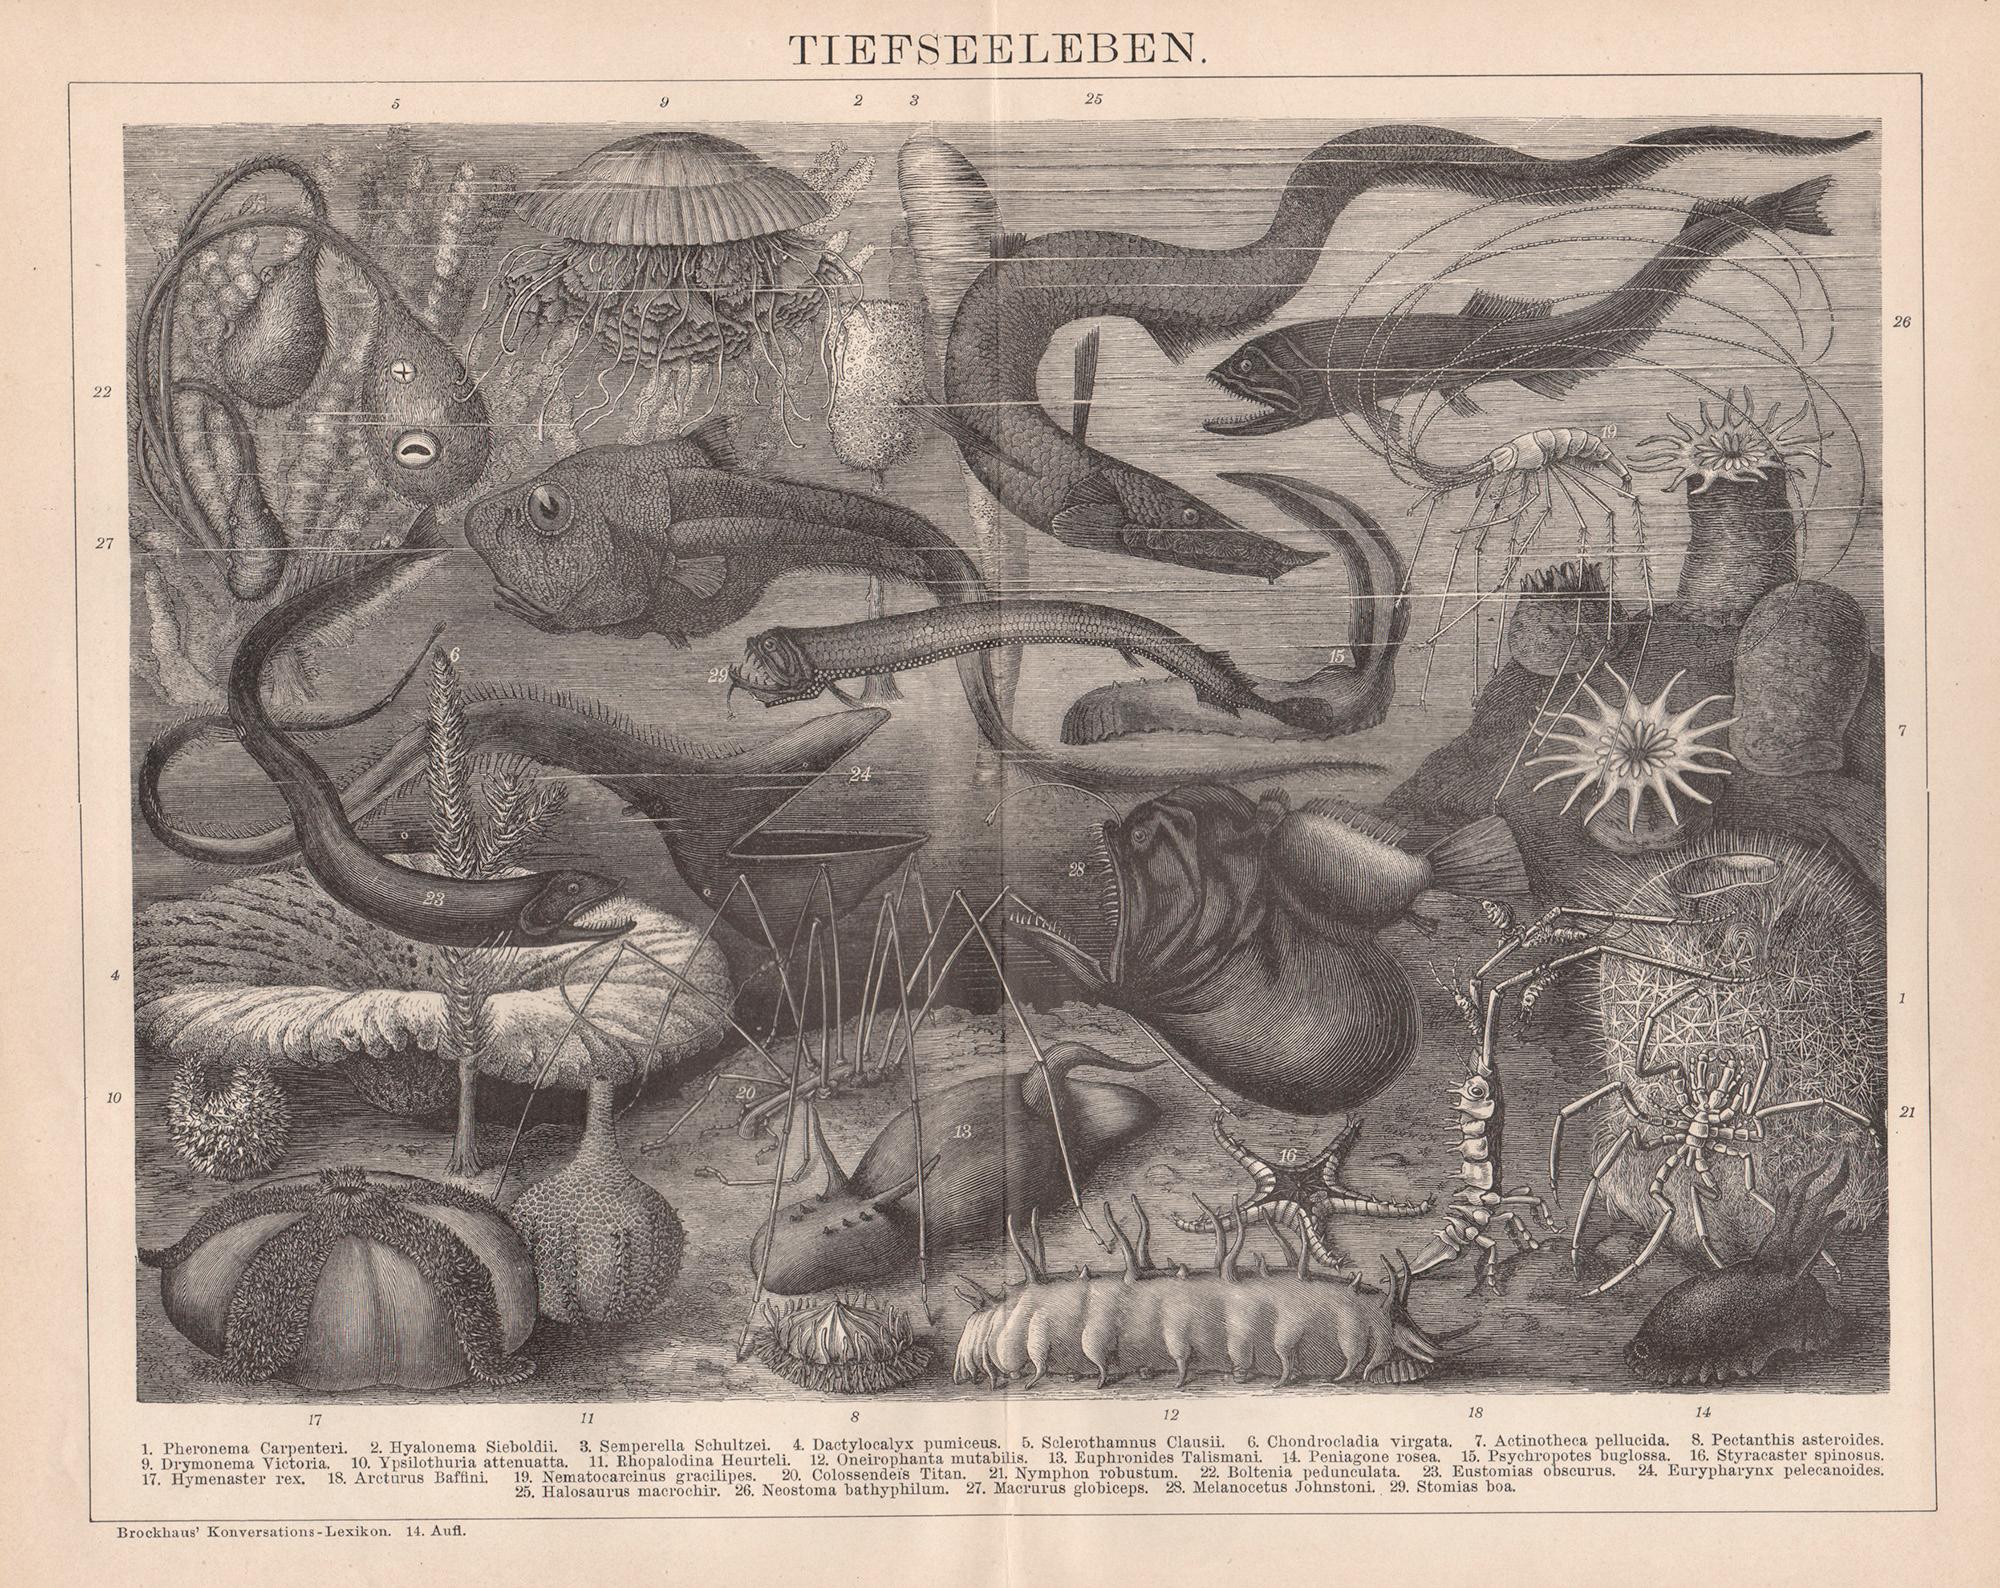 Tiefseeleben (Deep Sea Life), German antique underwater sea life engraving